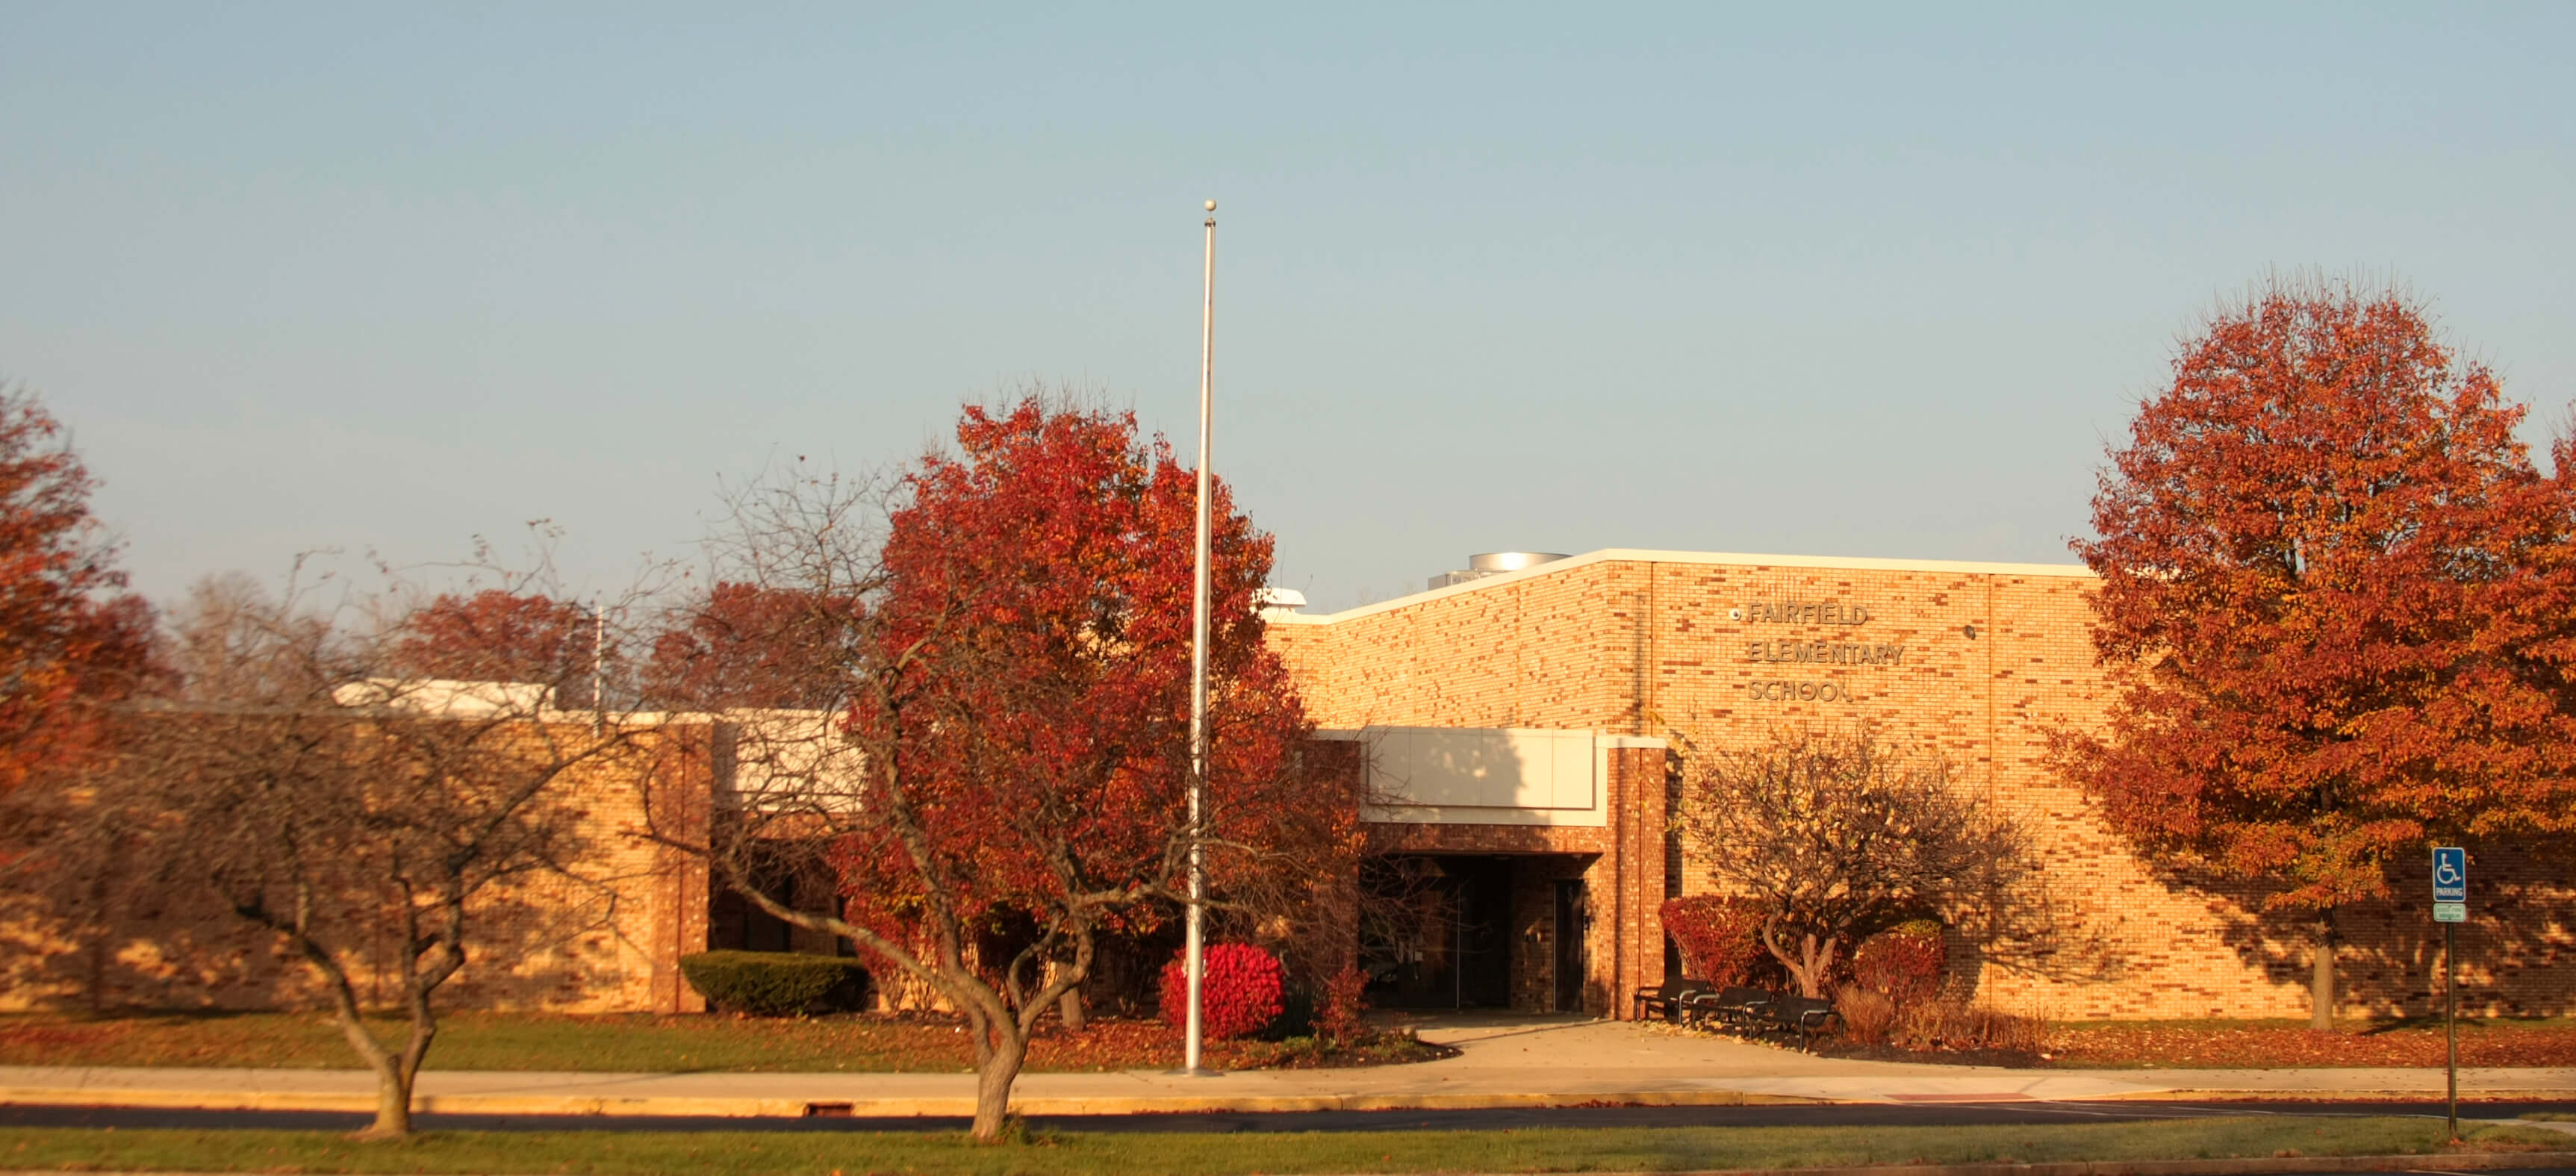 Fairfield Elementary